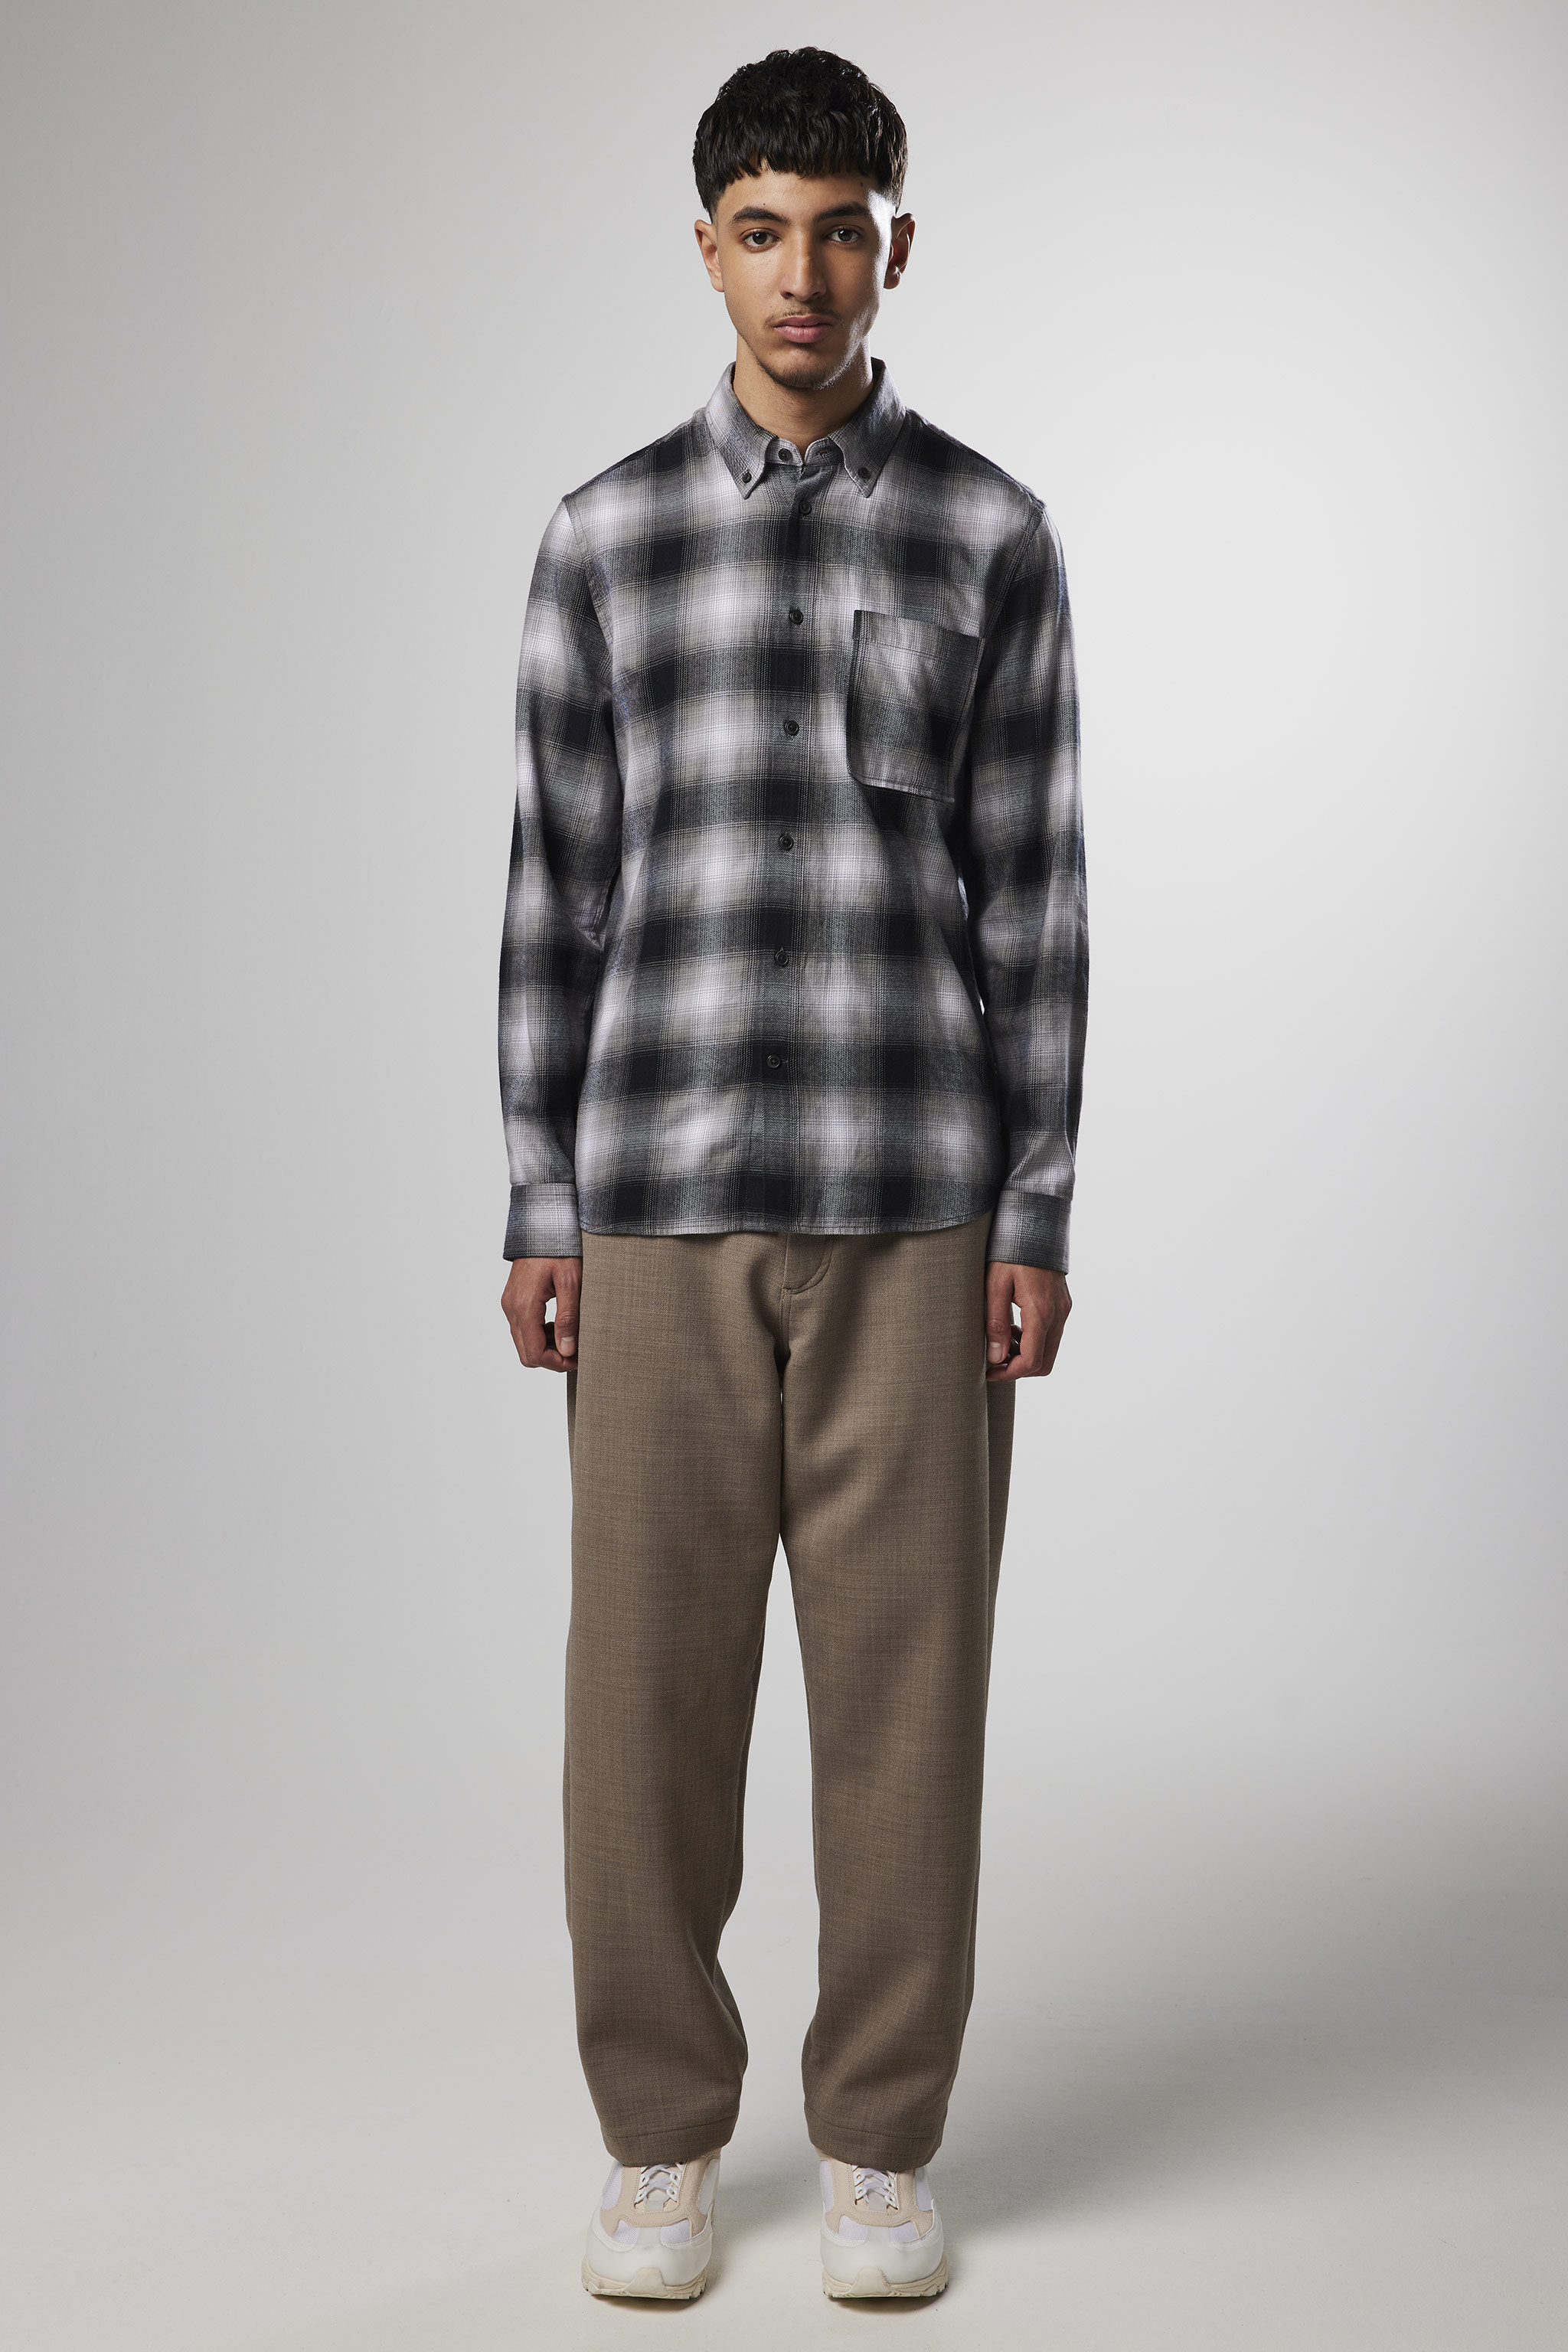 Arne 5997 men's shirt - Grey Check - Buy online at NN.07®